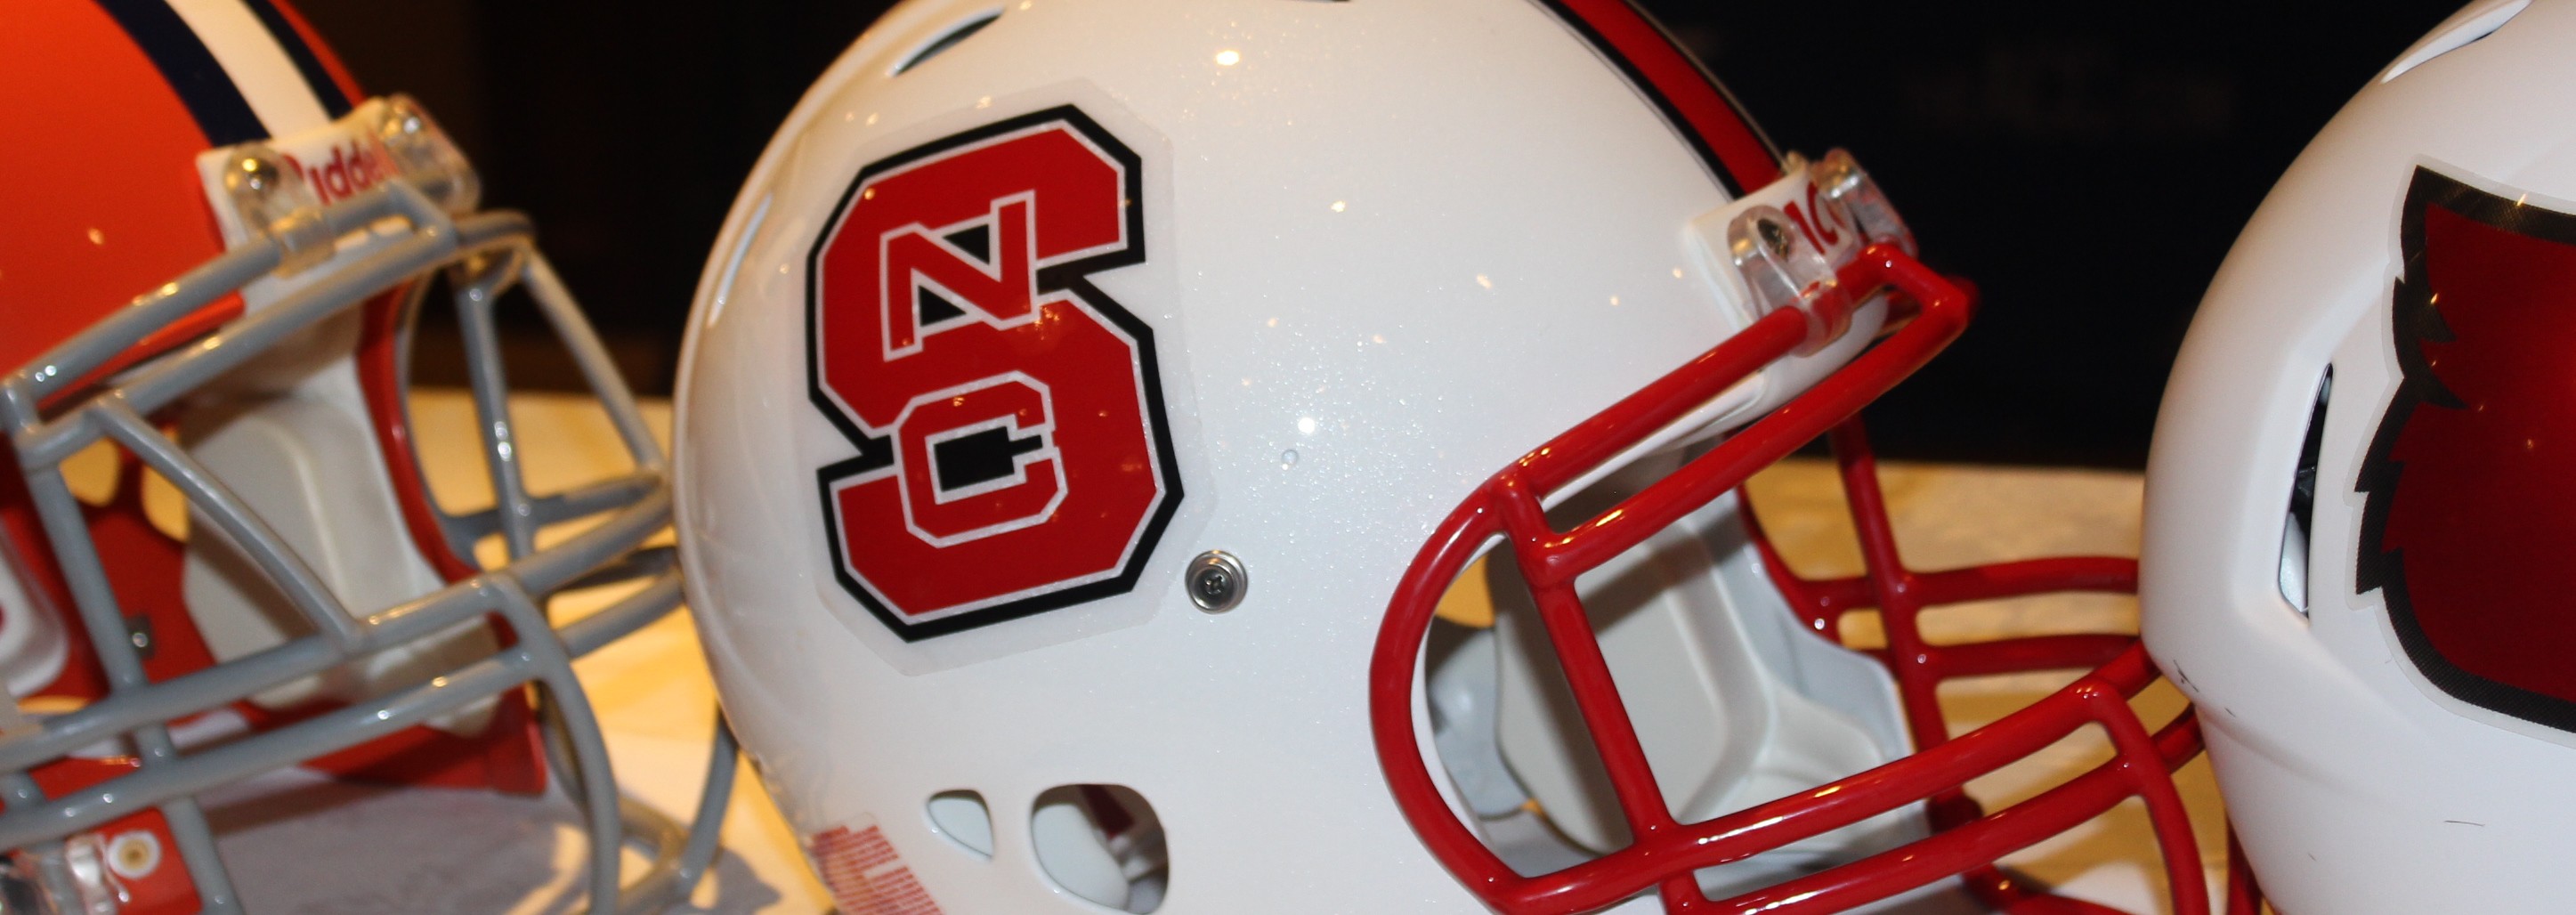 North Carolina State (NC State) Helmet 2014 ACC Kickoff Photo by Mark Blankenbaker